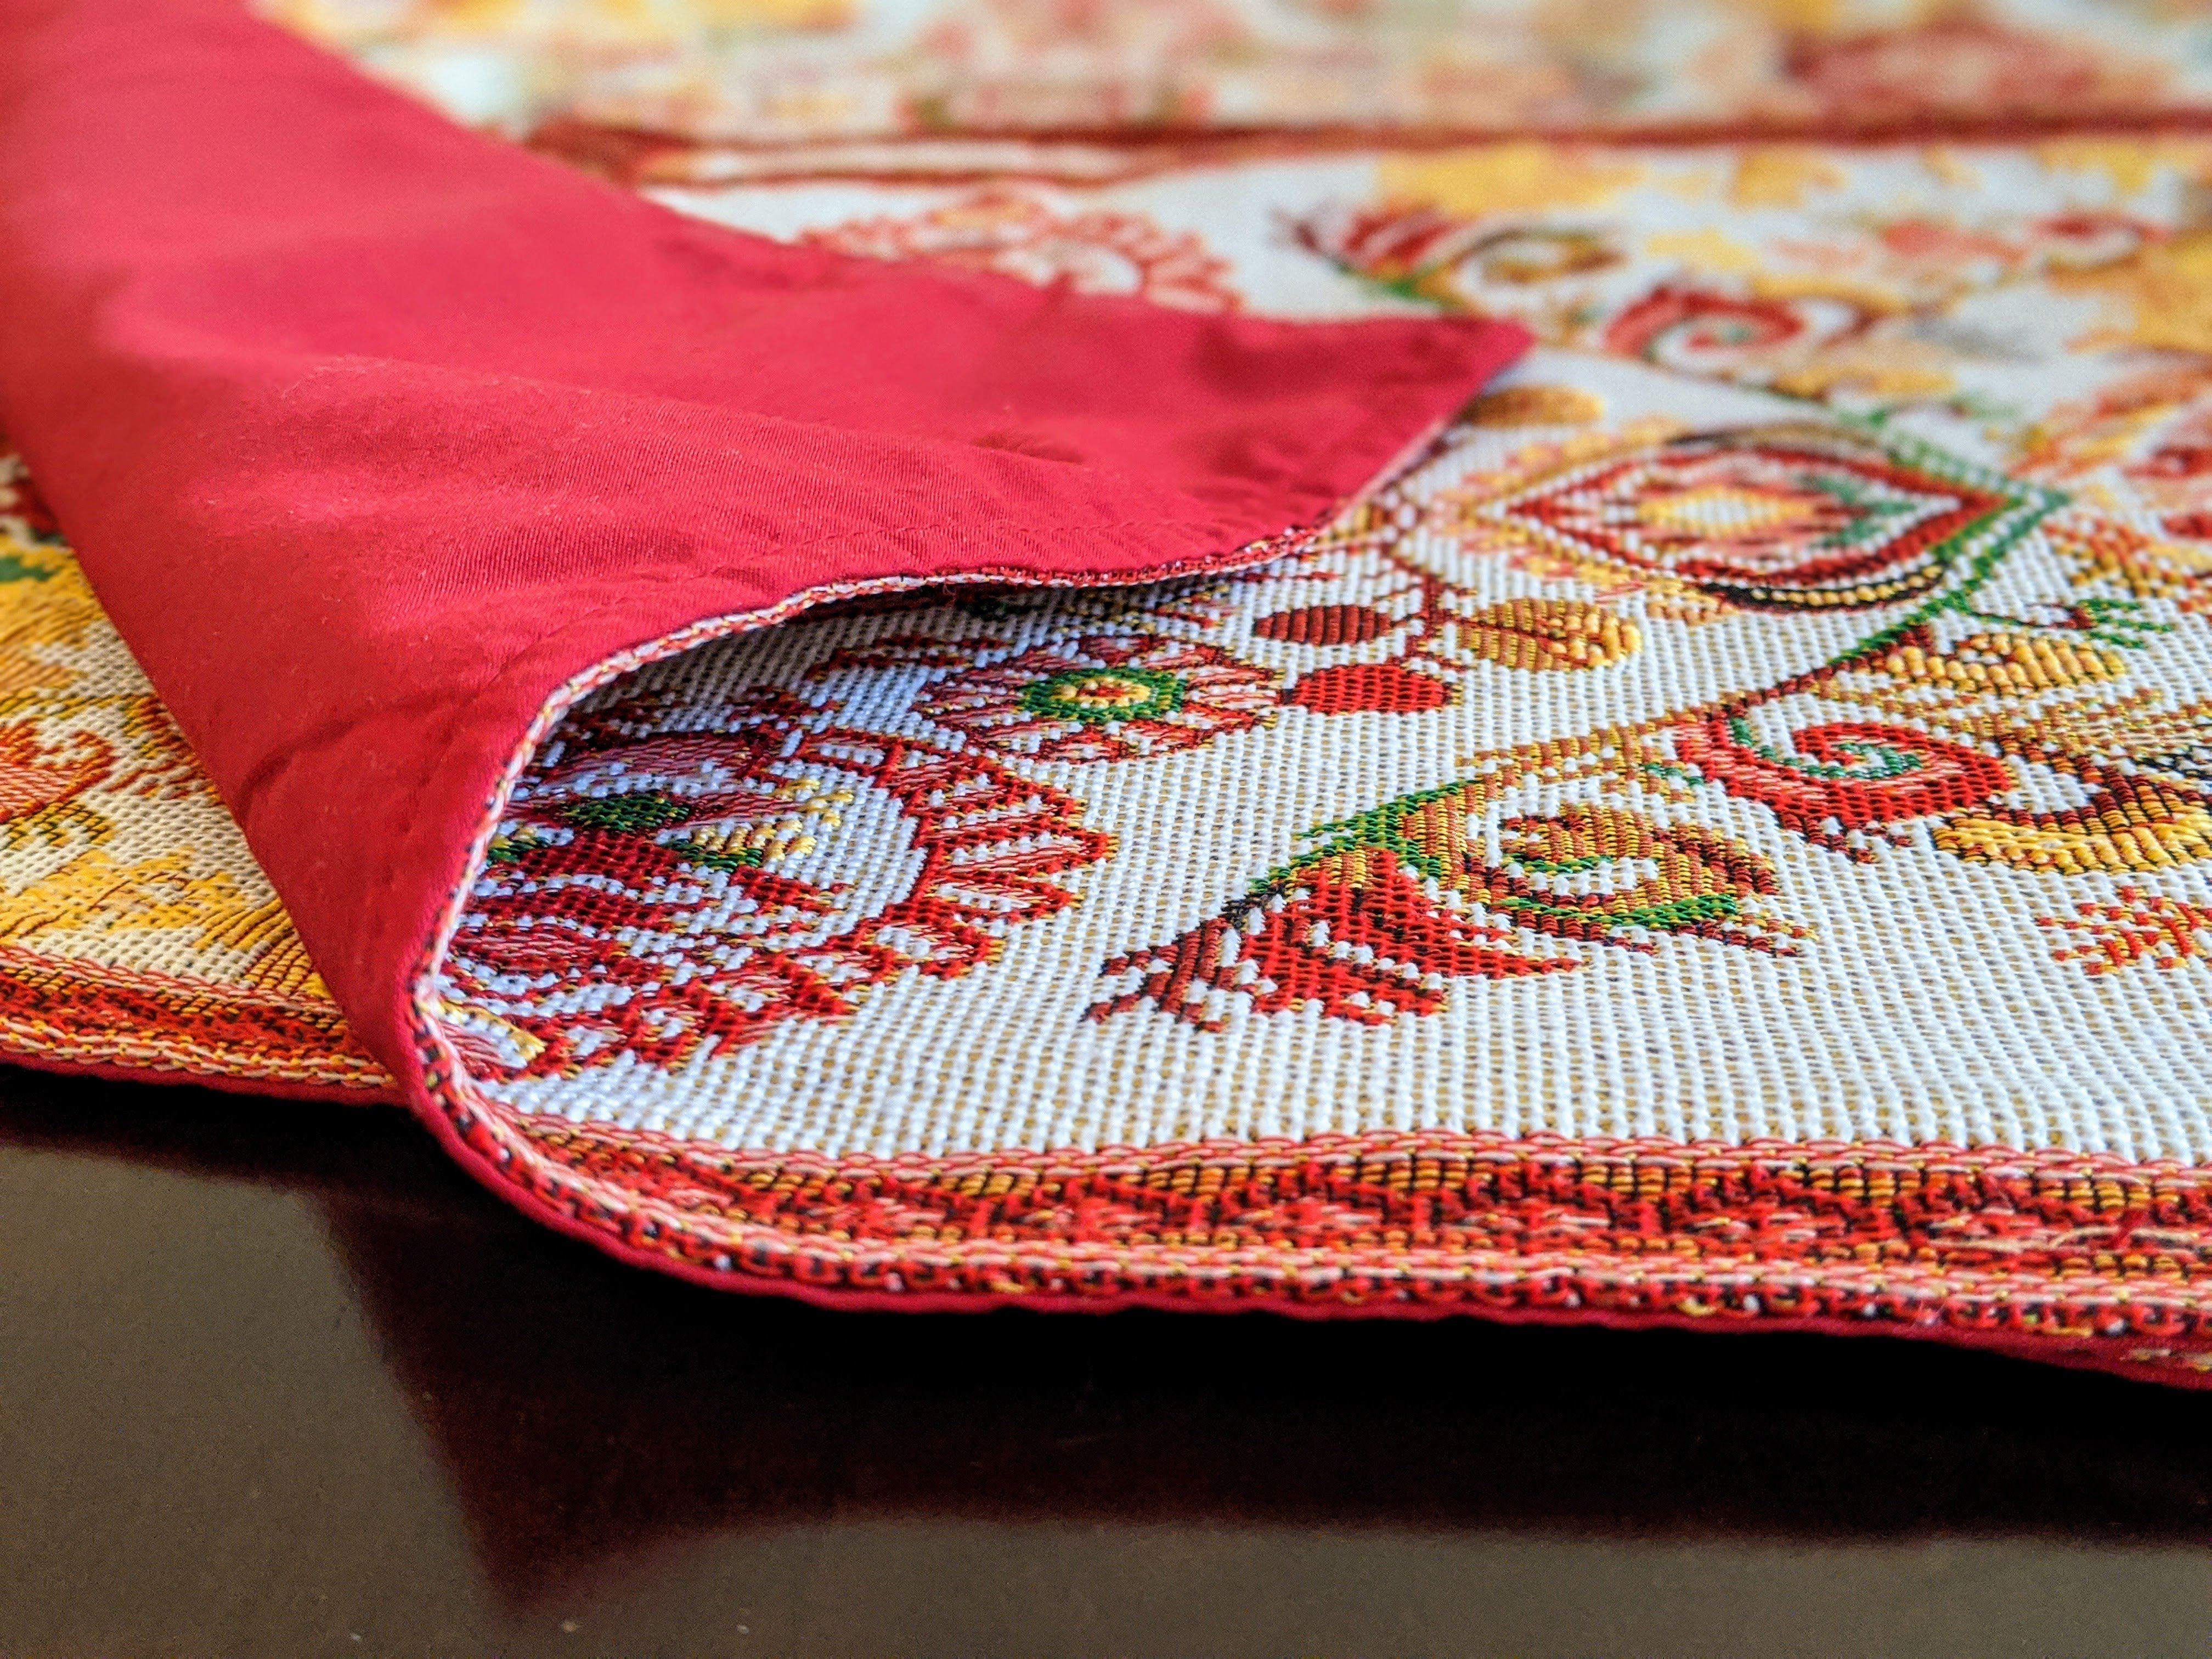 Tache Elegant Burgundy Ornate Paisley Woven Tapestry Placemat Set (18194) - Tache Home Fashion